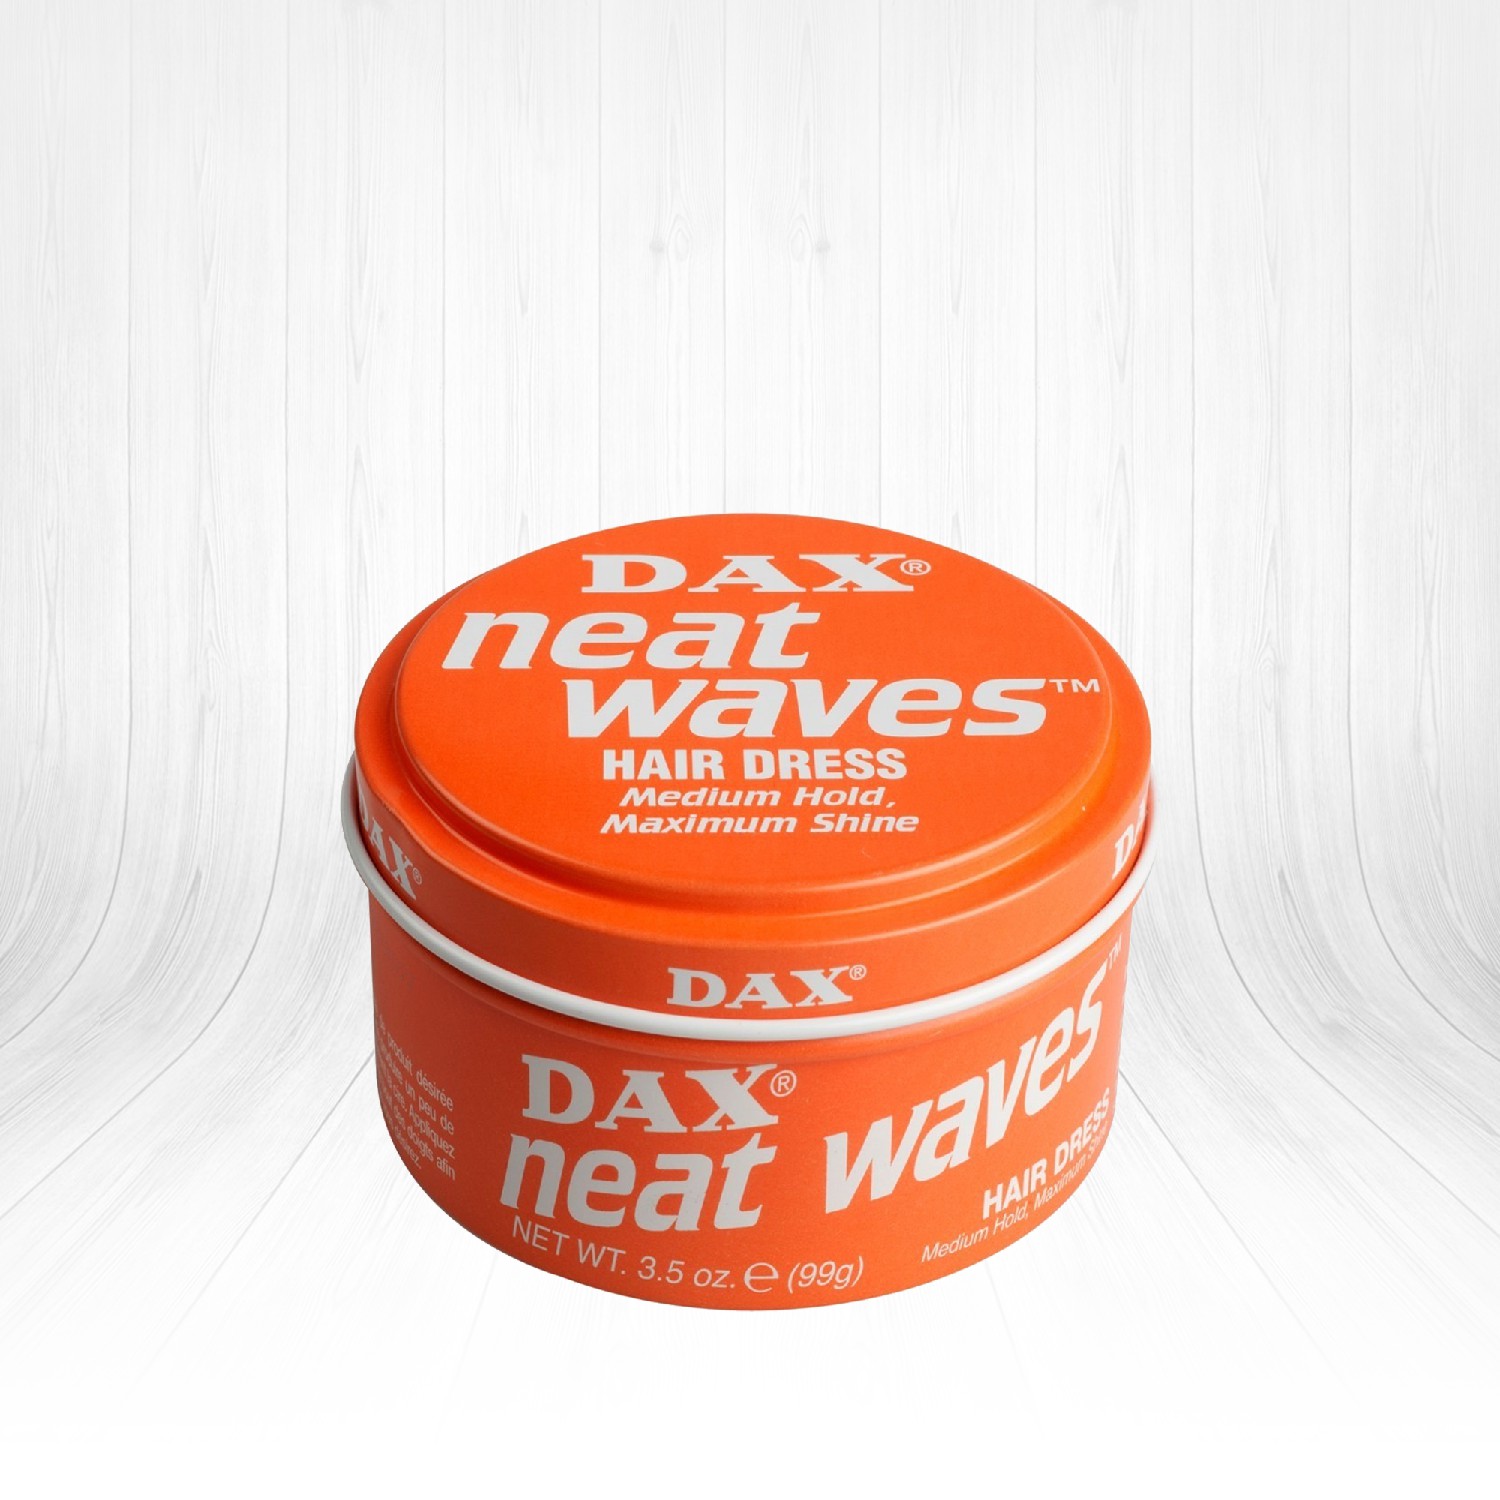 Dax Neat Waves Hair Dress Saç Şekillendirici g